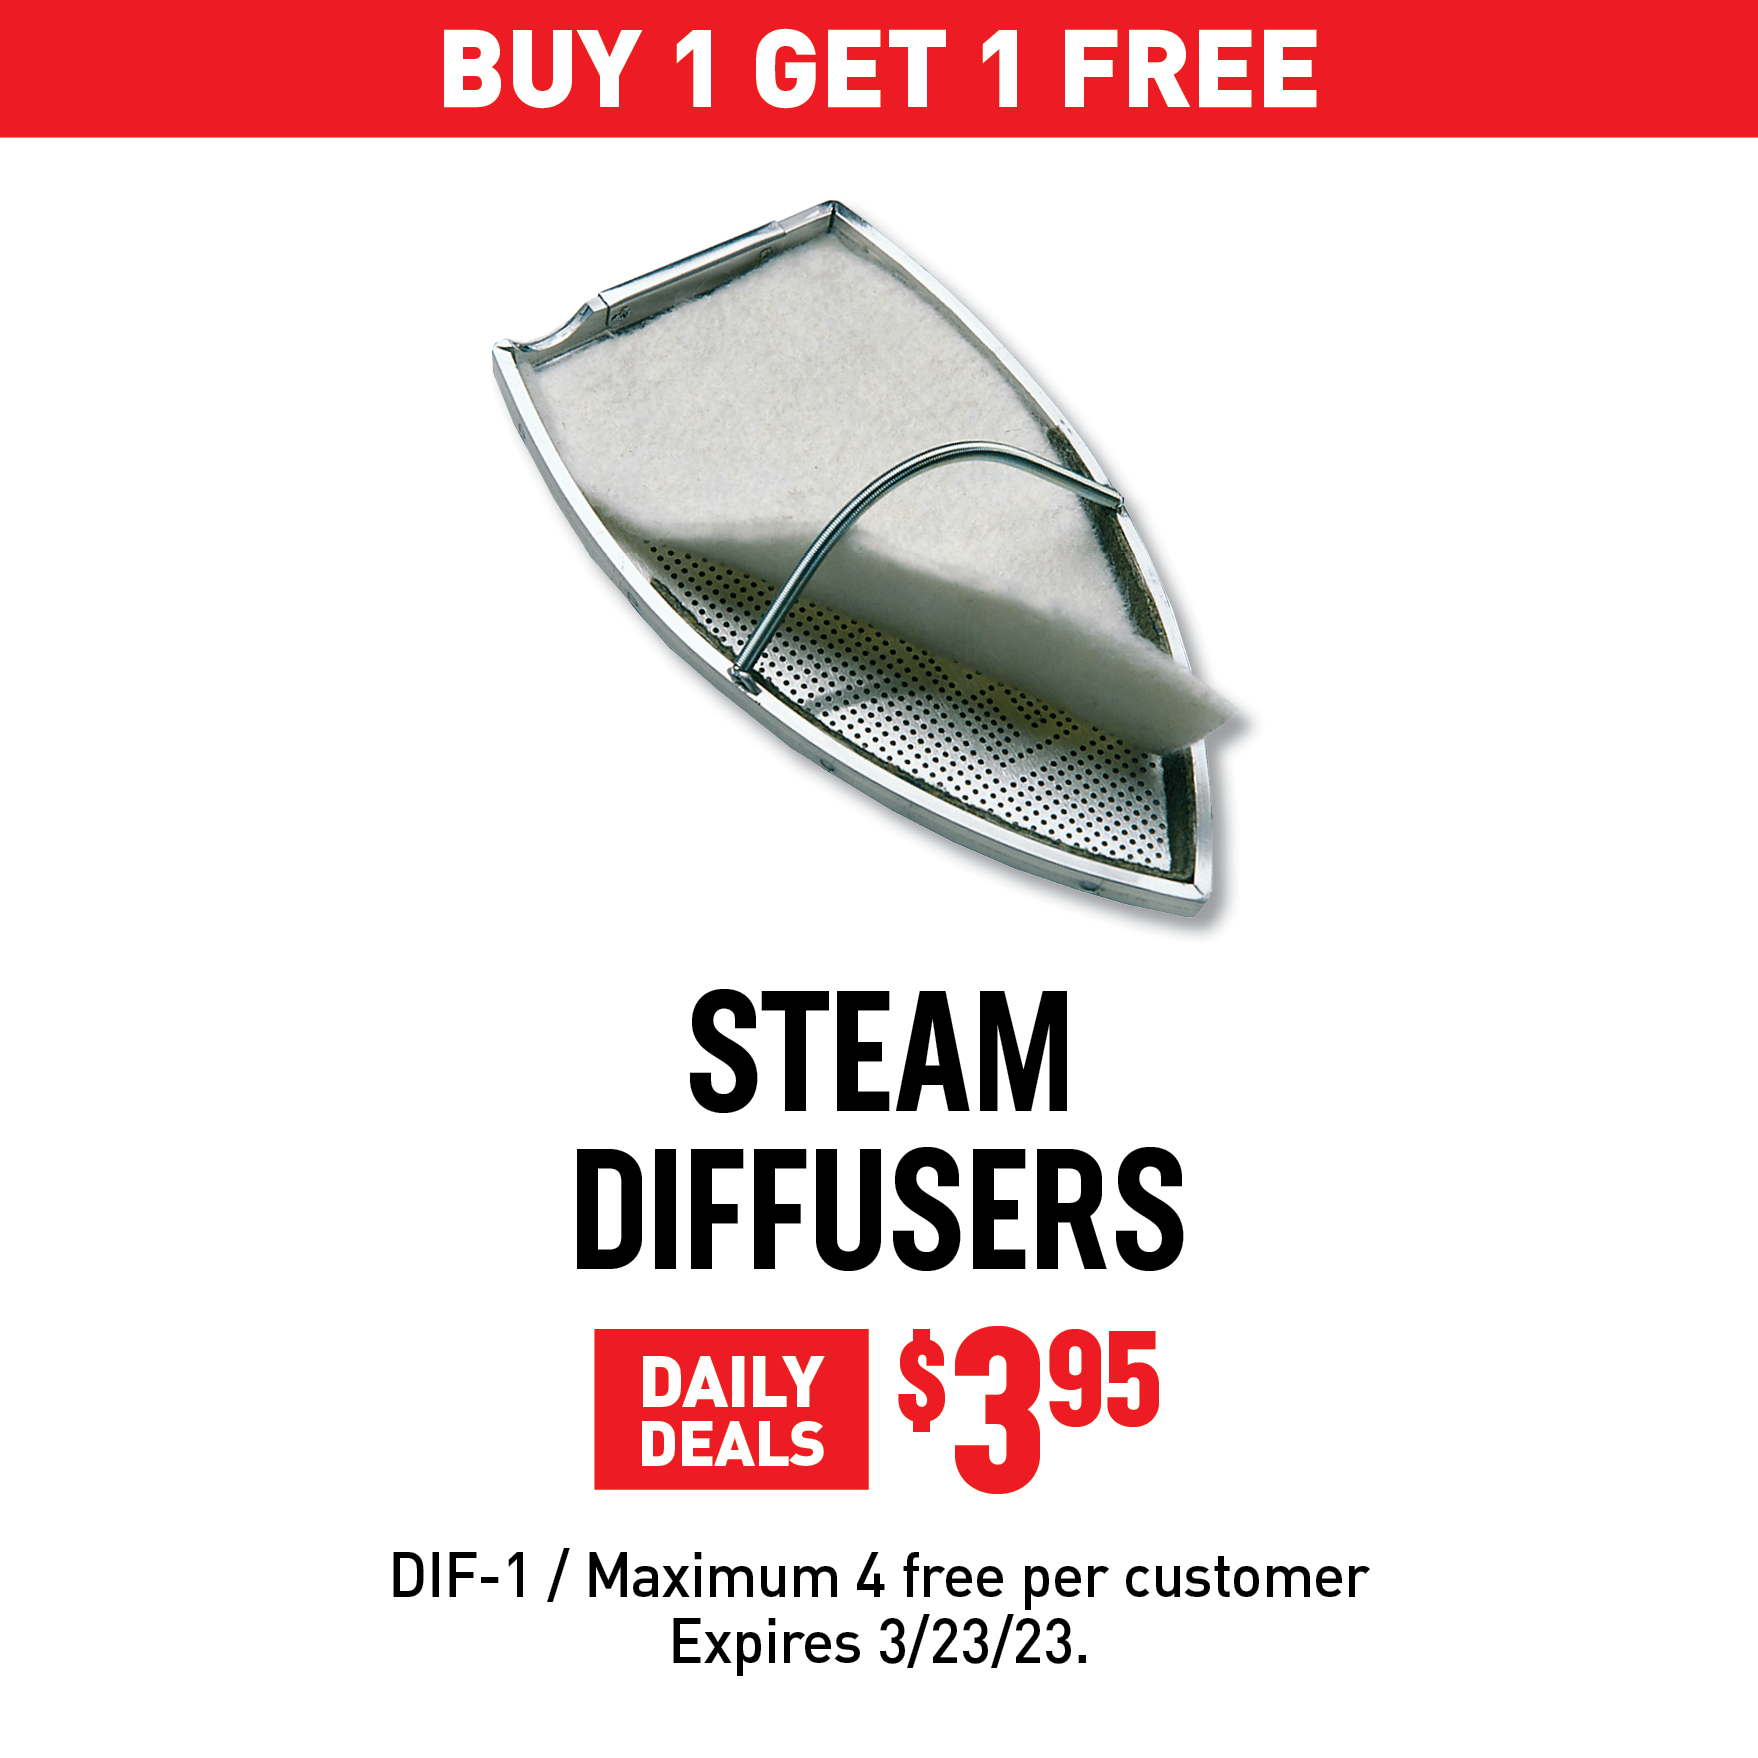 Buy 1 Get 1 Free - Steam Diffusers $3.95 / DIF-1 / Maximum 4 free per customer / Exxpires 3/23/23.